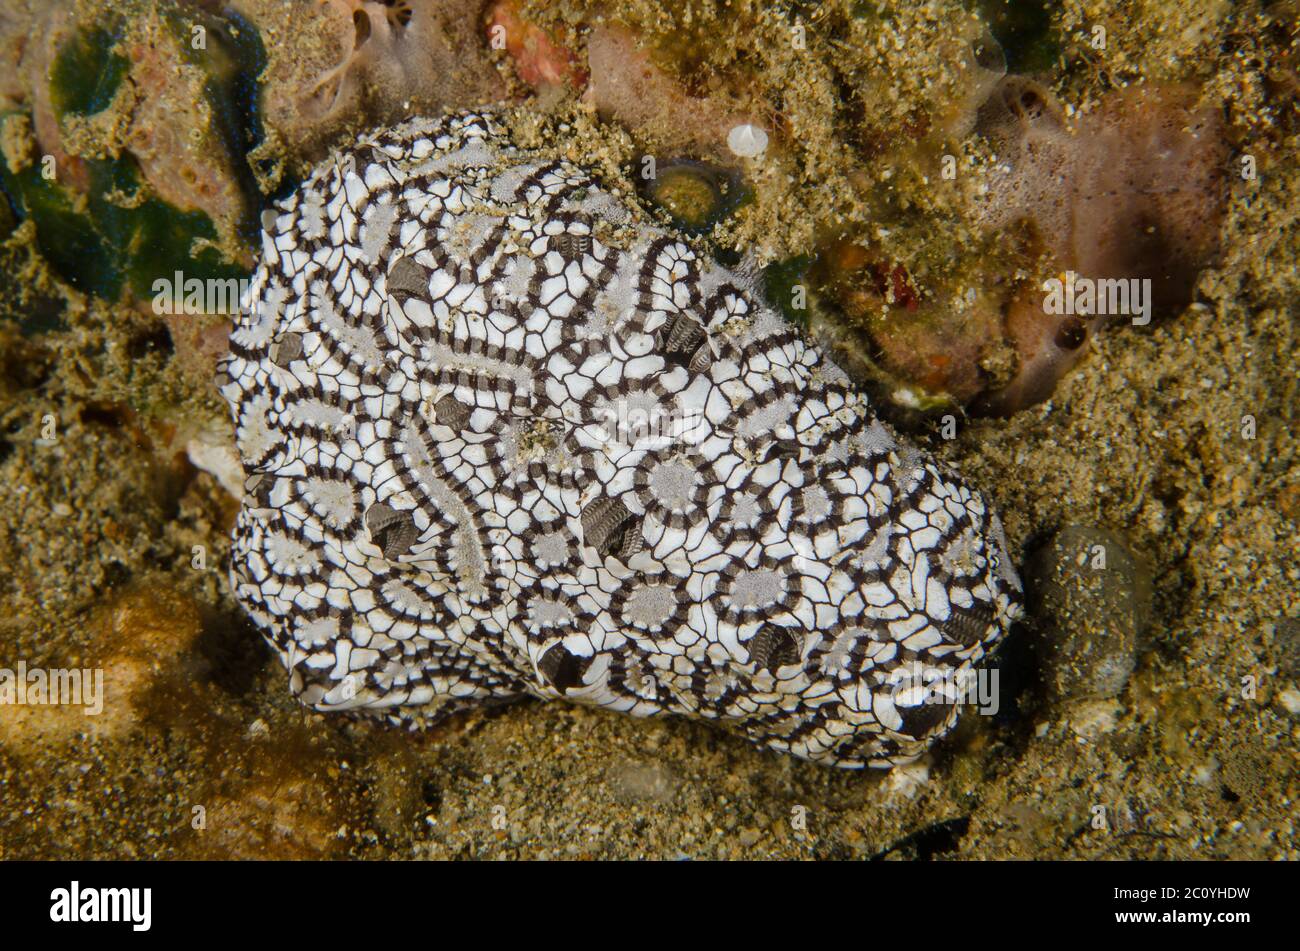 Colonial ascidian tunicates, Botryllus sp., Styelidae, Anilao, Batangas, Philippines, Pacific Ocean, Asia Stock Photo